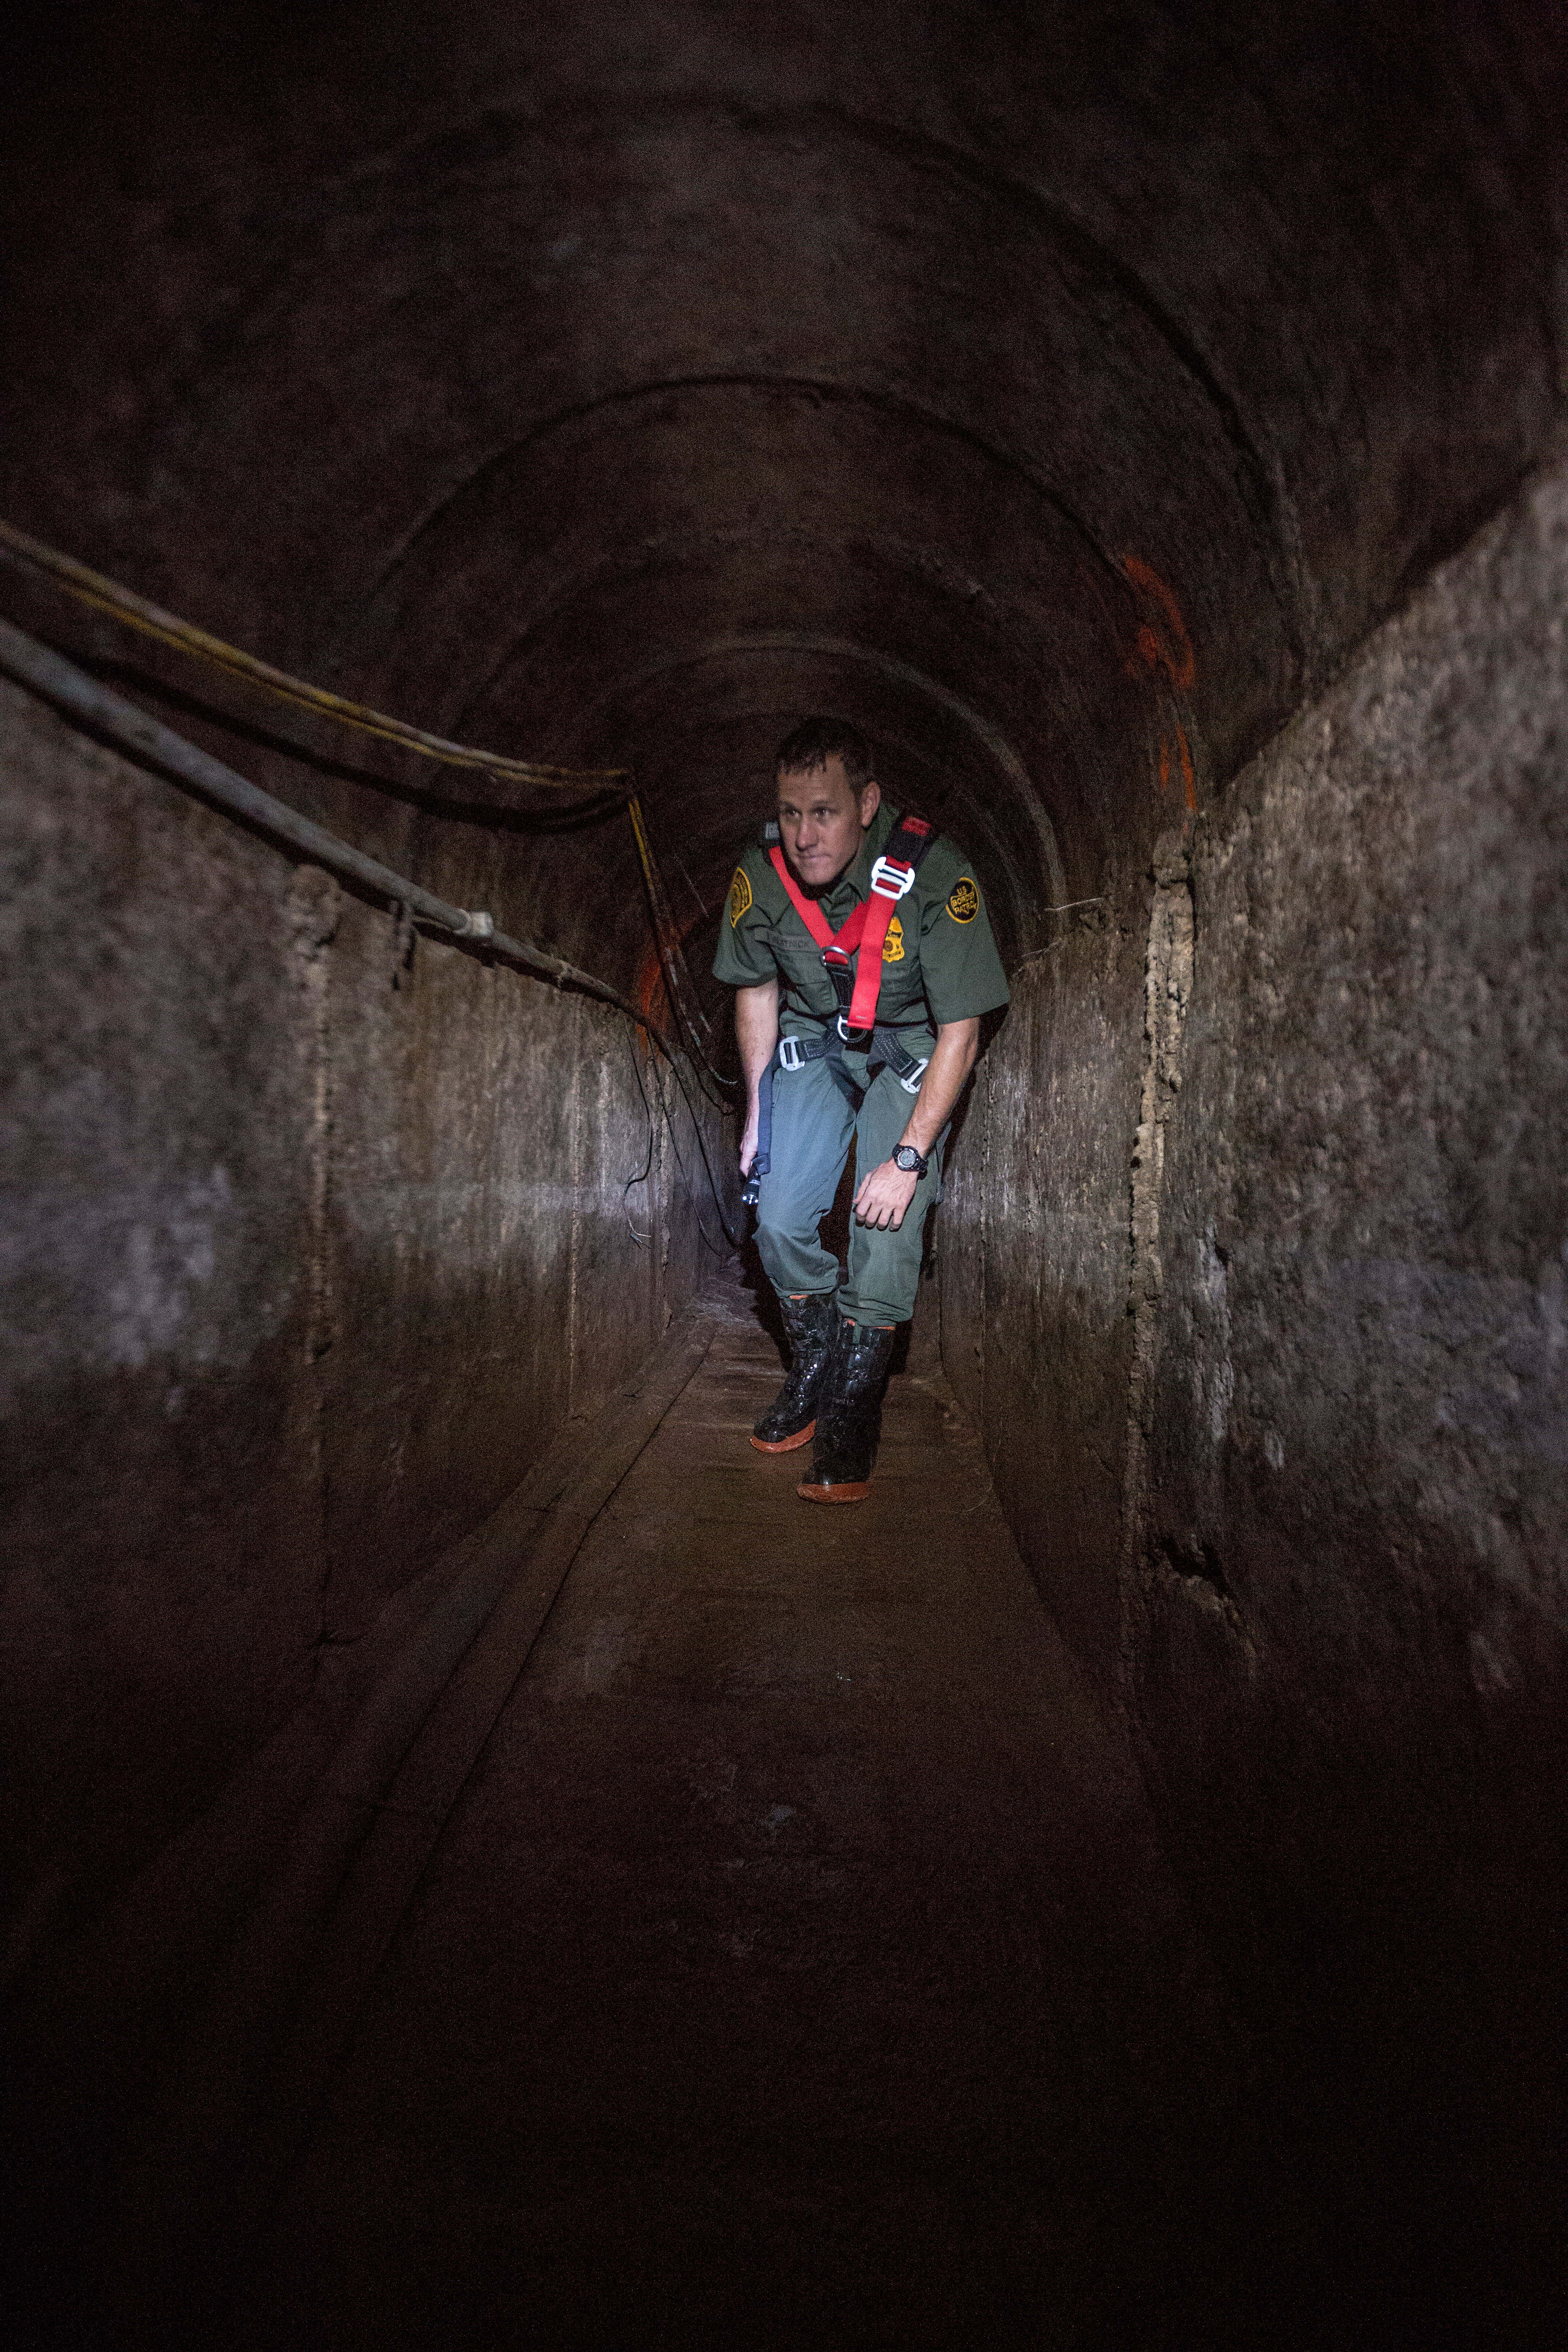 Border Patrol agent kneels as he investigates tunnel.